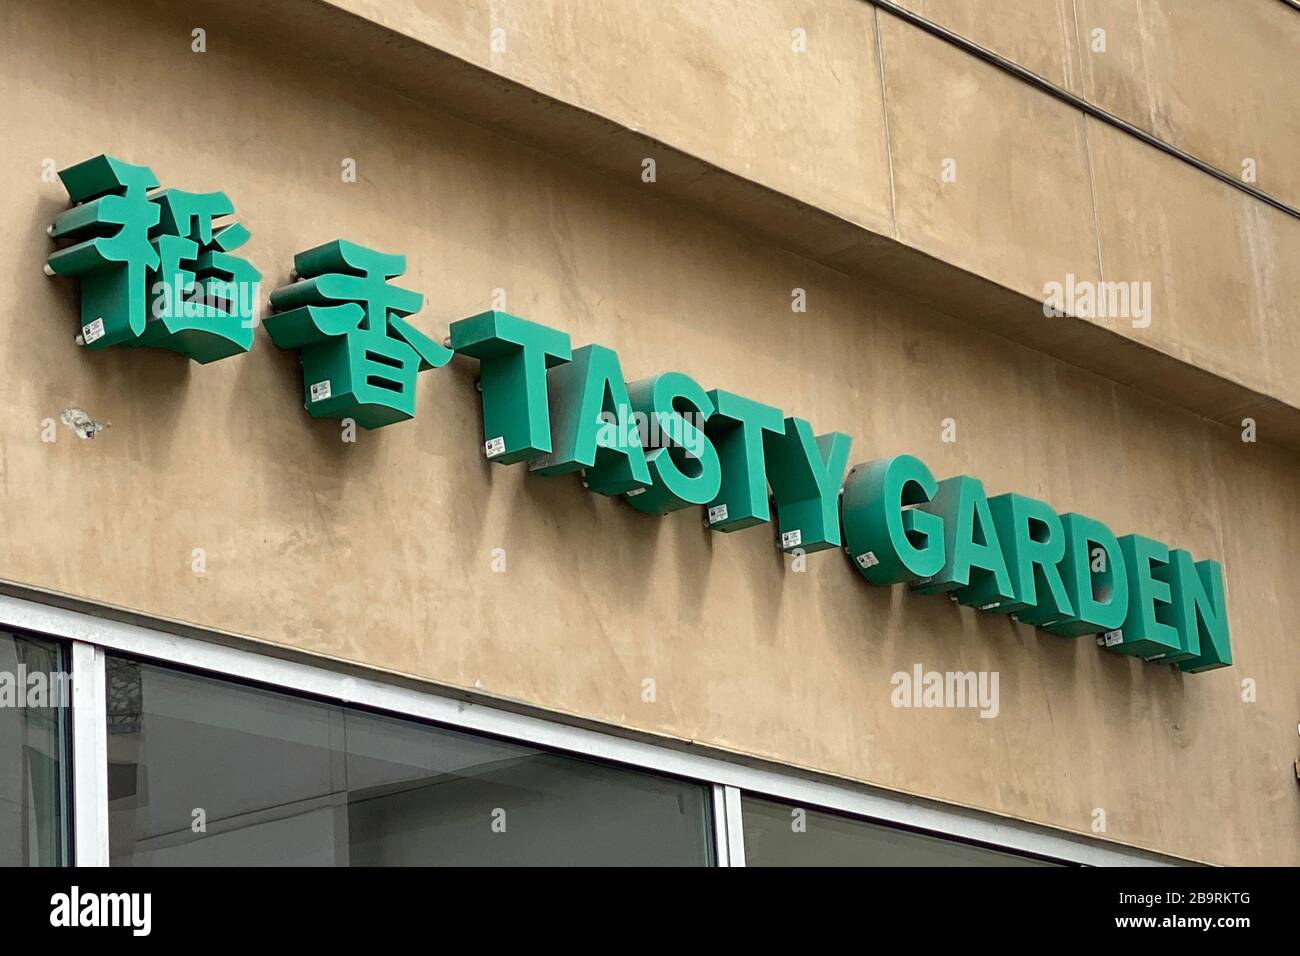 The Tasty Garden Restaurant Amid The Global Coronavirus Covid 19